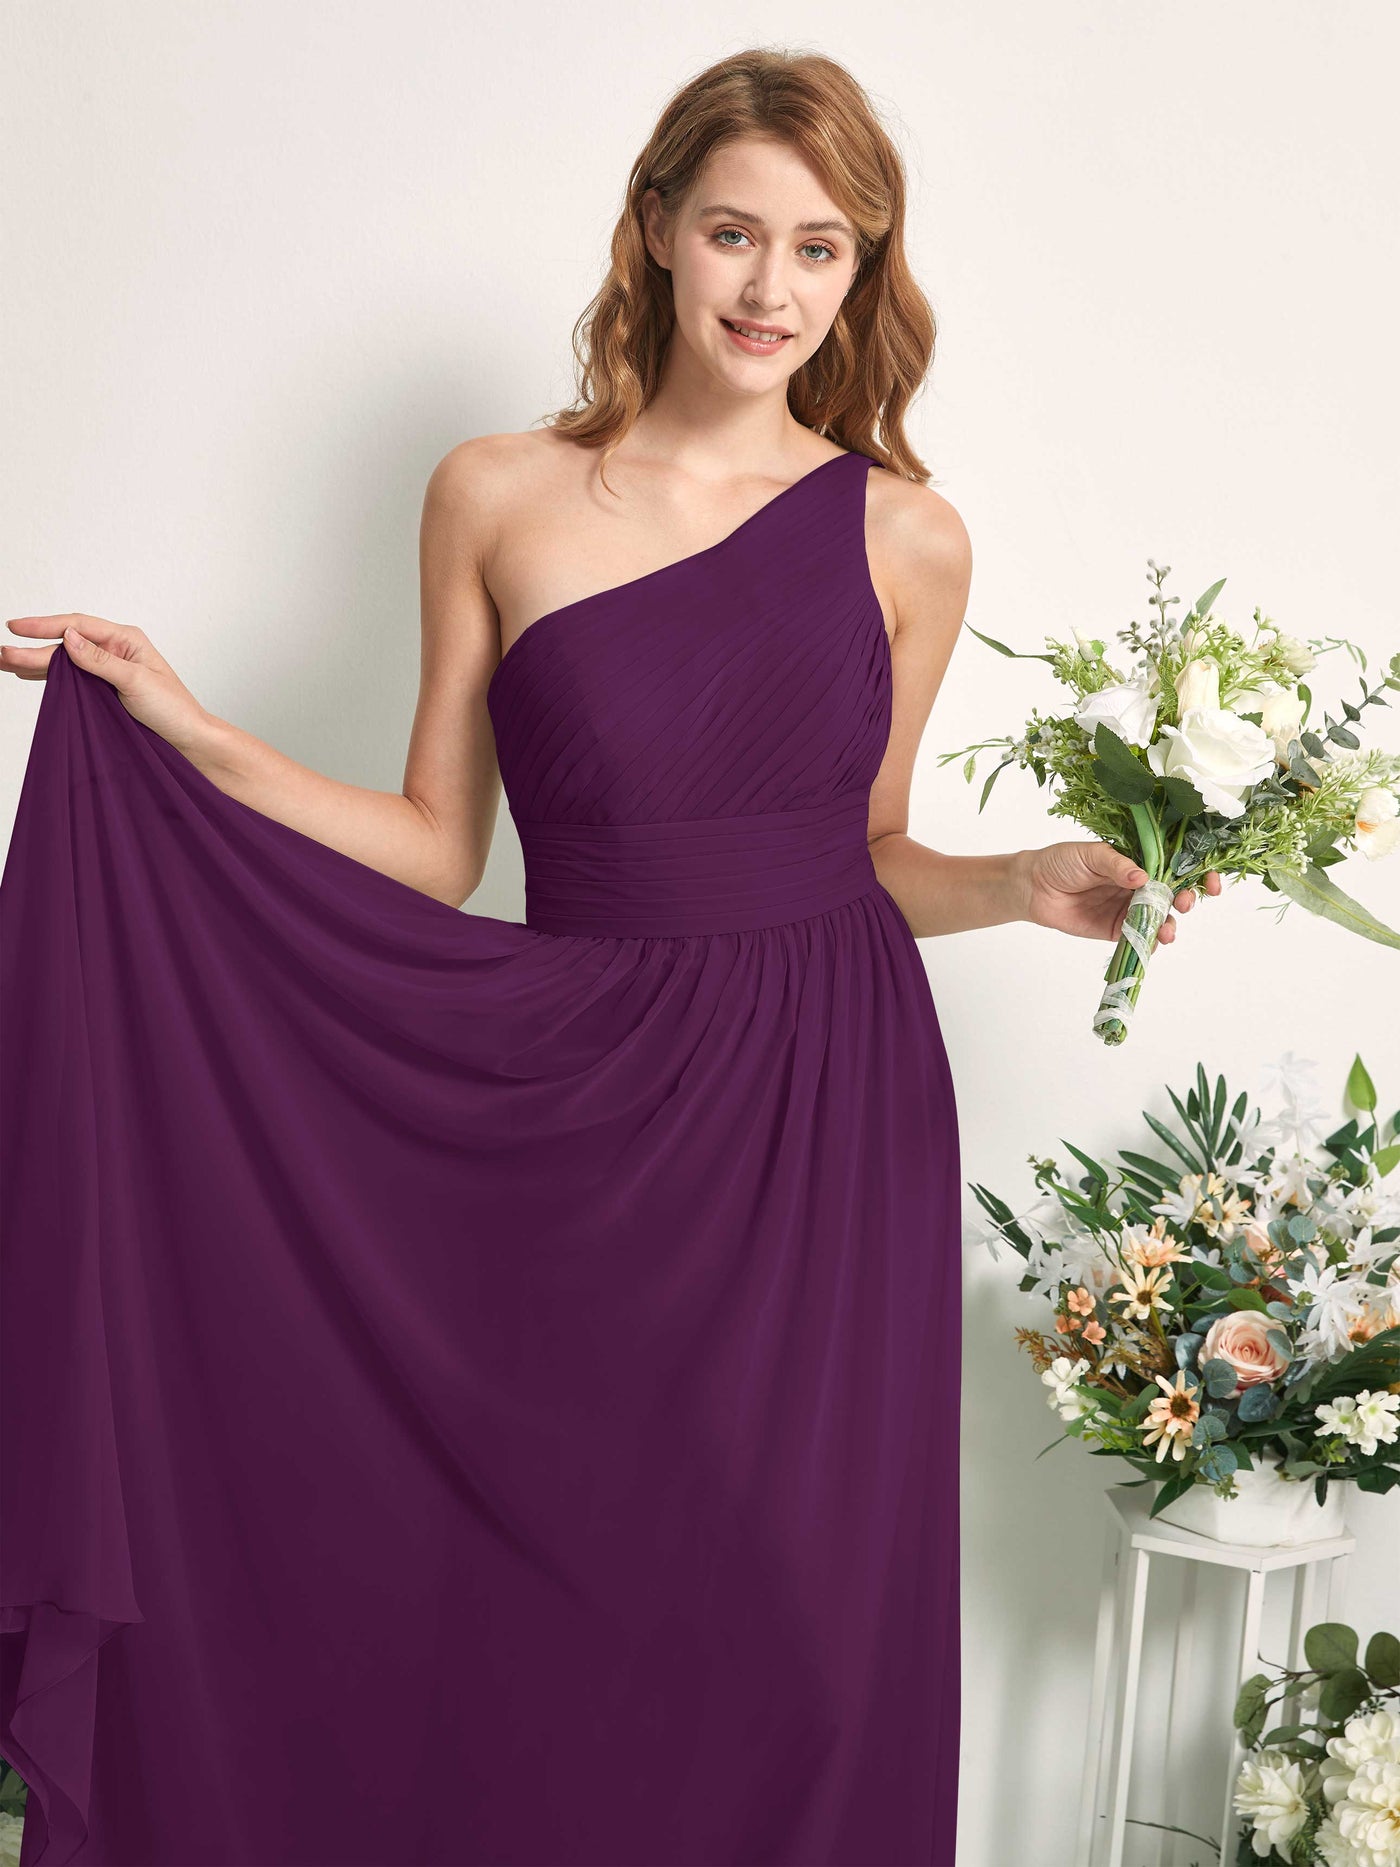 Bridesmaid Dress A-line Chiffon One Shoulder Full Length Sleeveless Wedding Party Dress - Grape (81226731)#color_grape